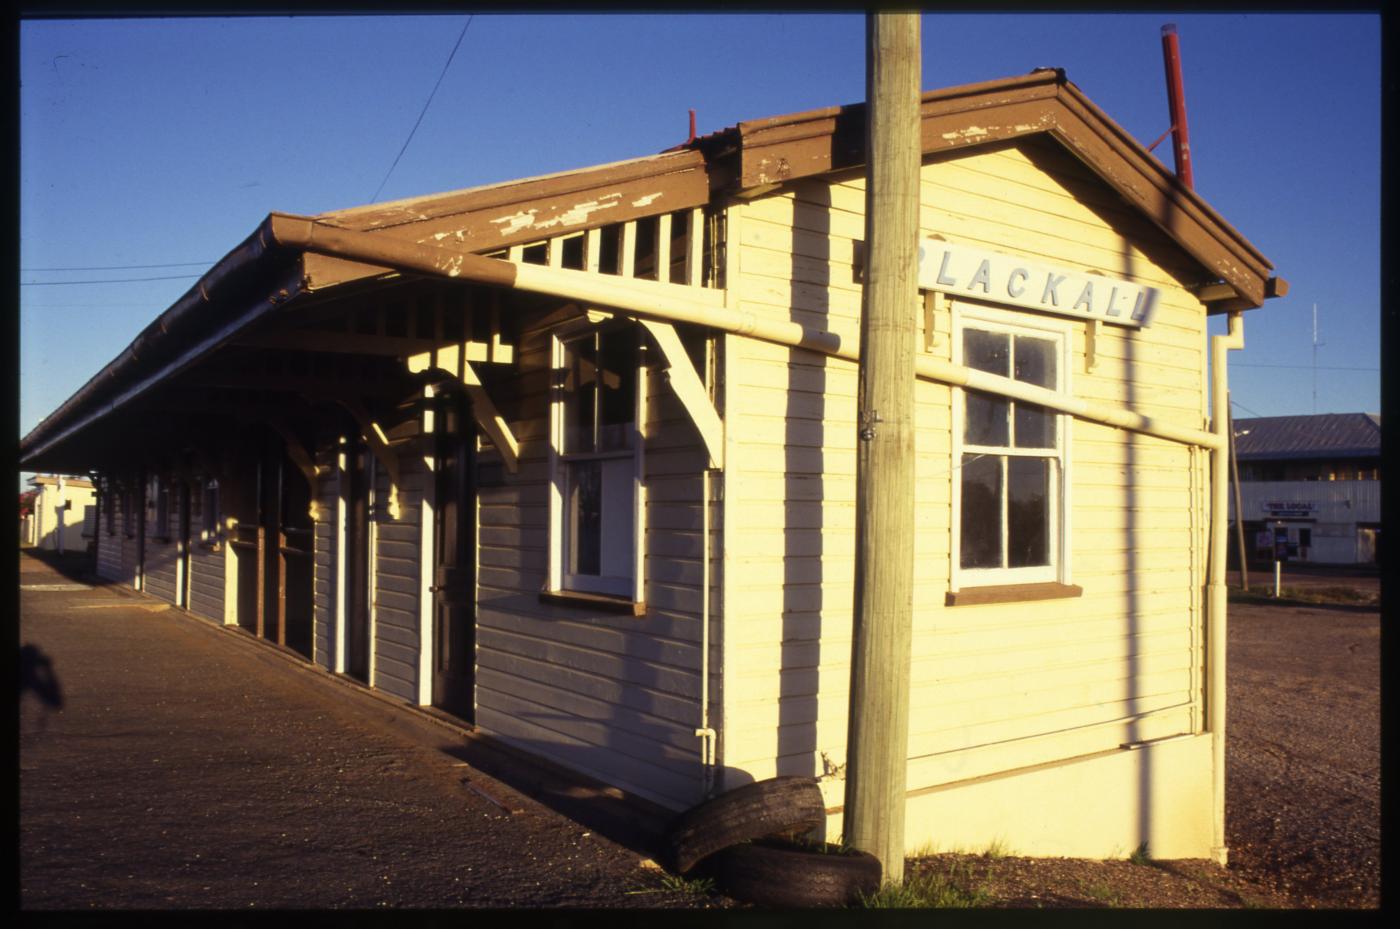 Railway Station, Blackall